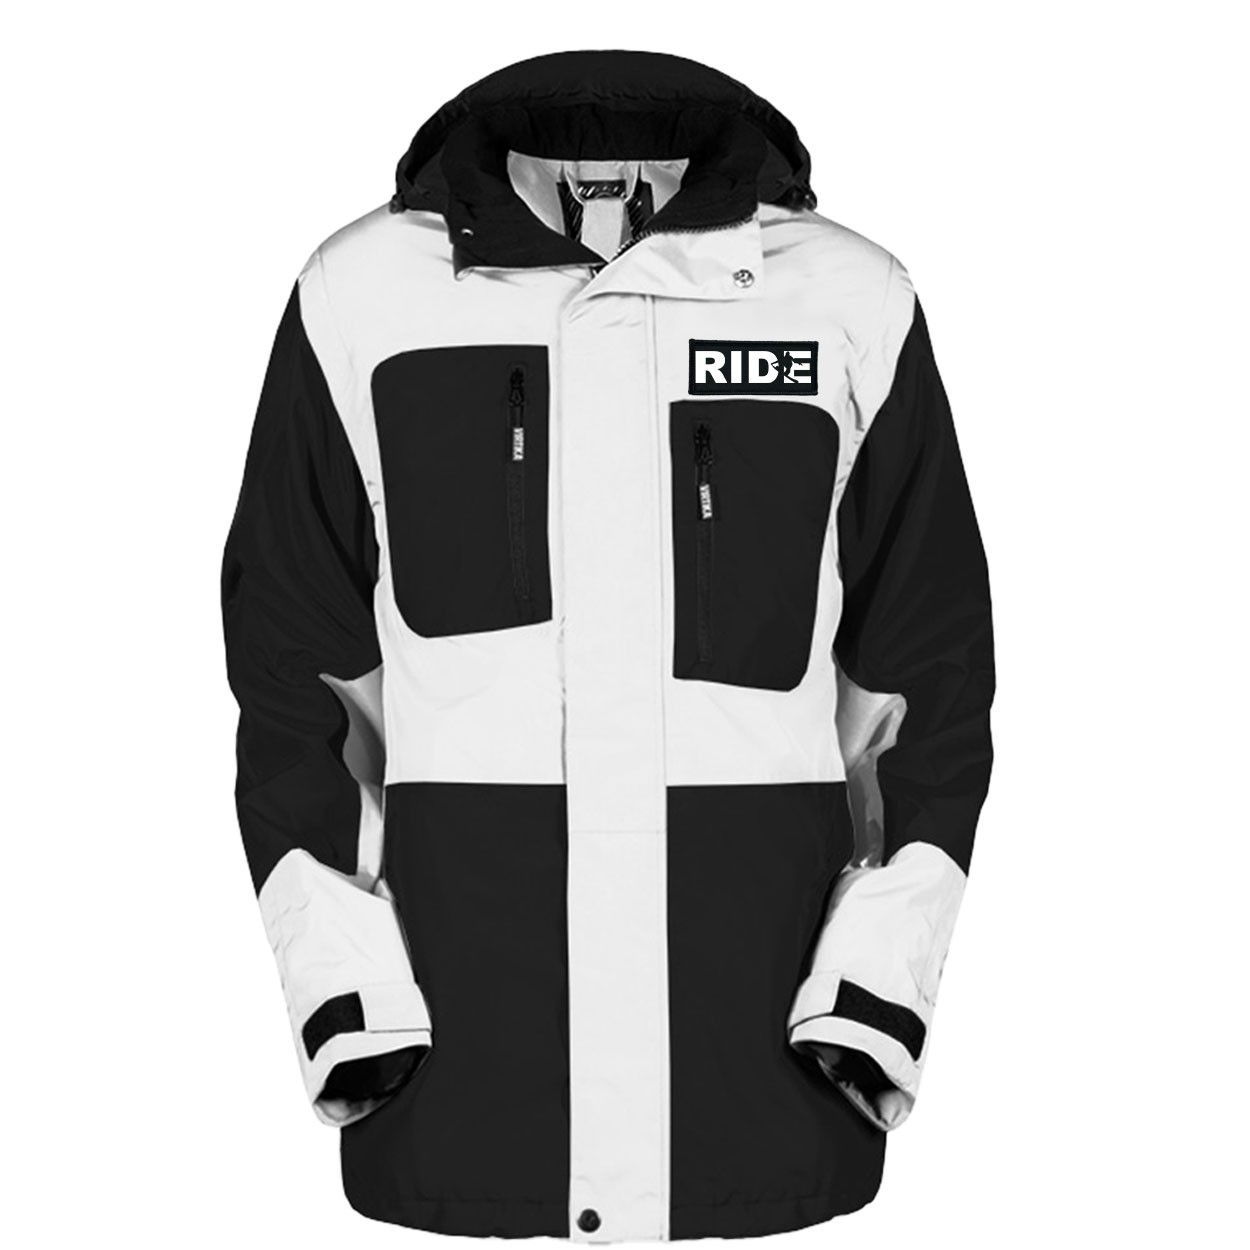 Ride Snowboard Logo Classic Woven Patch Pro Snowboard Jacket (Black/White)